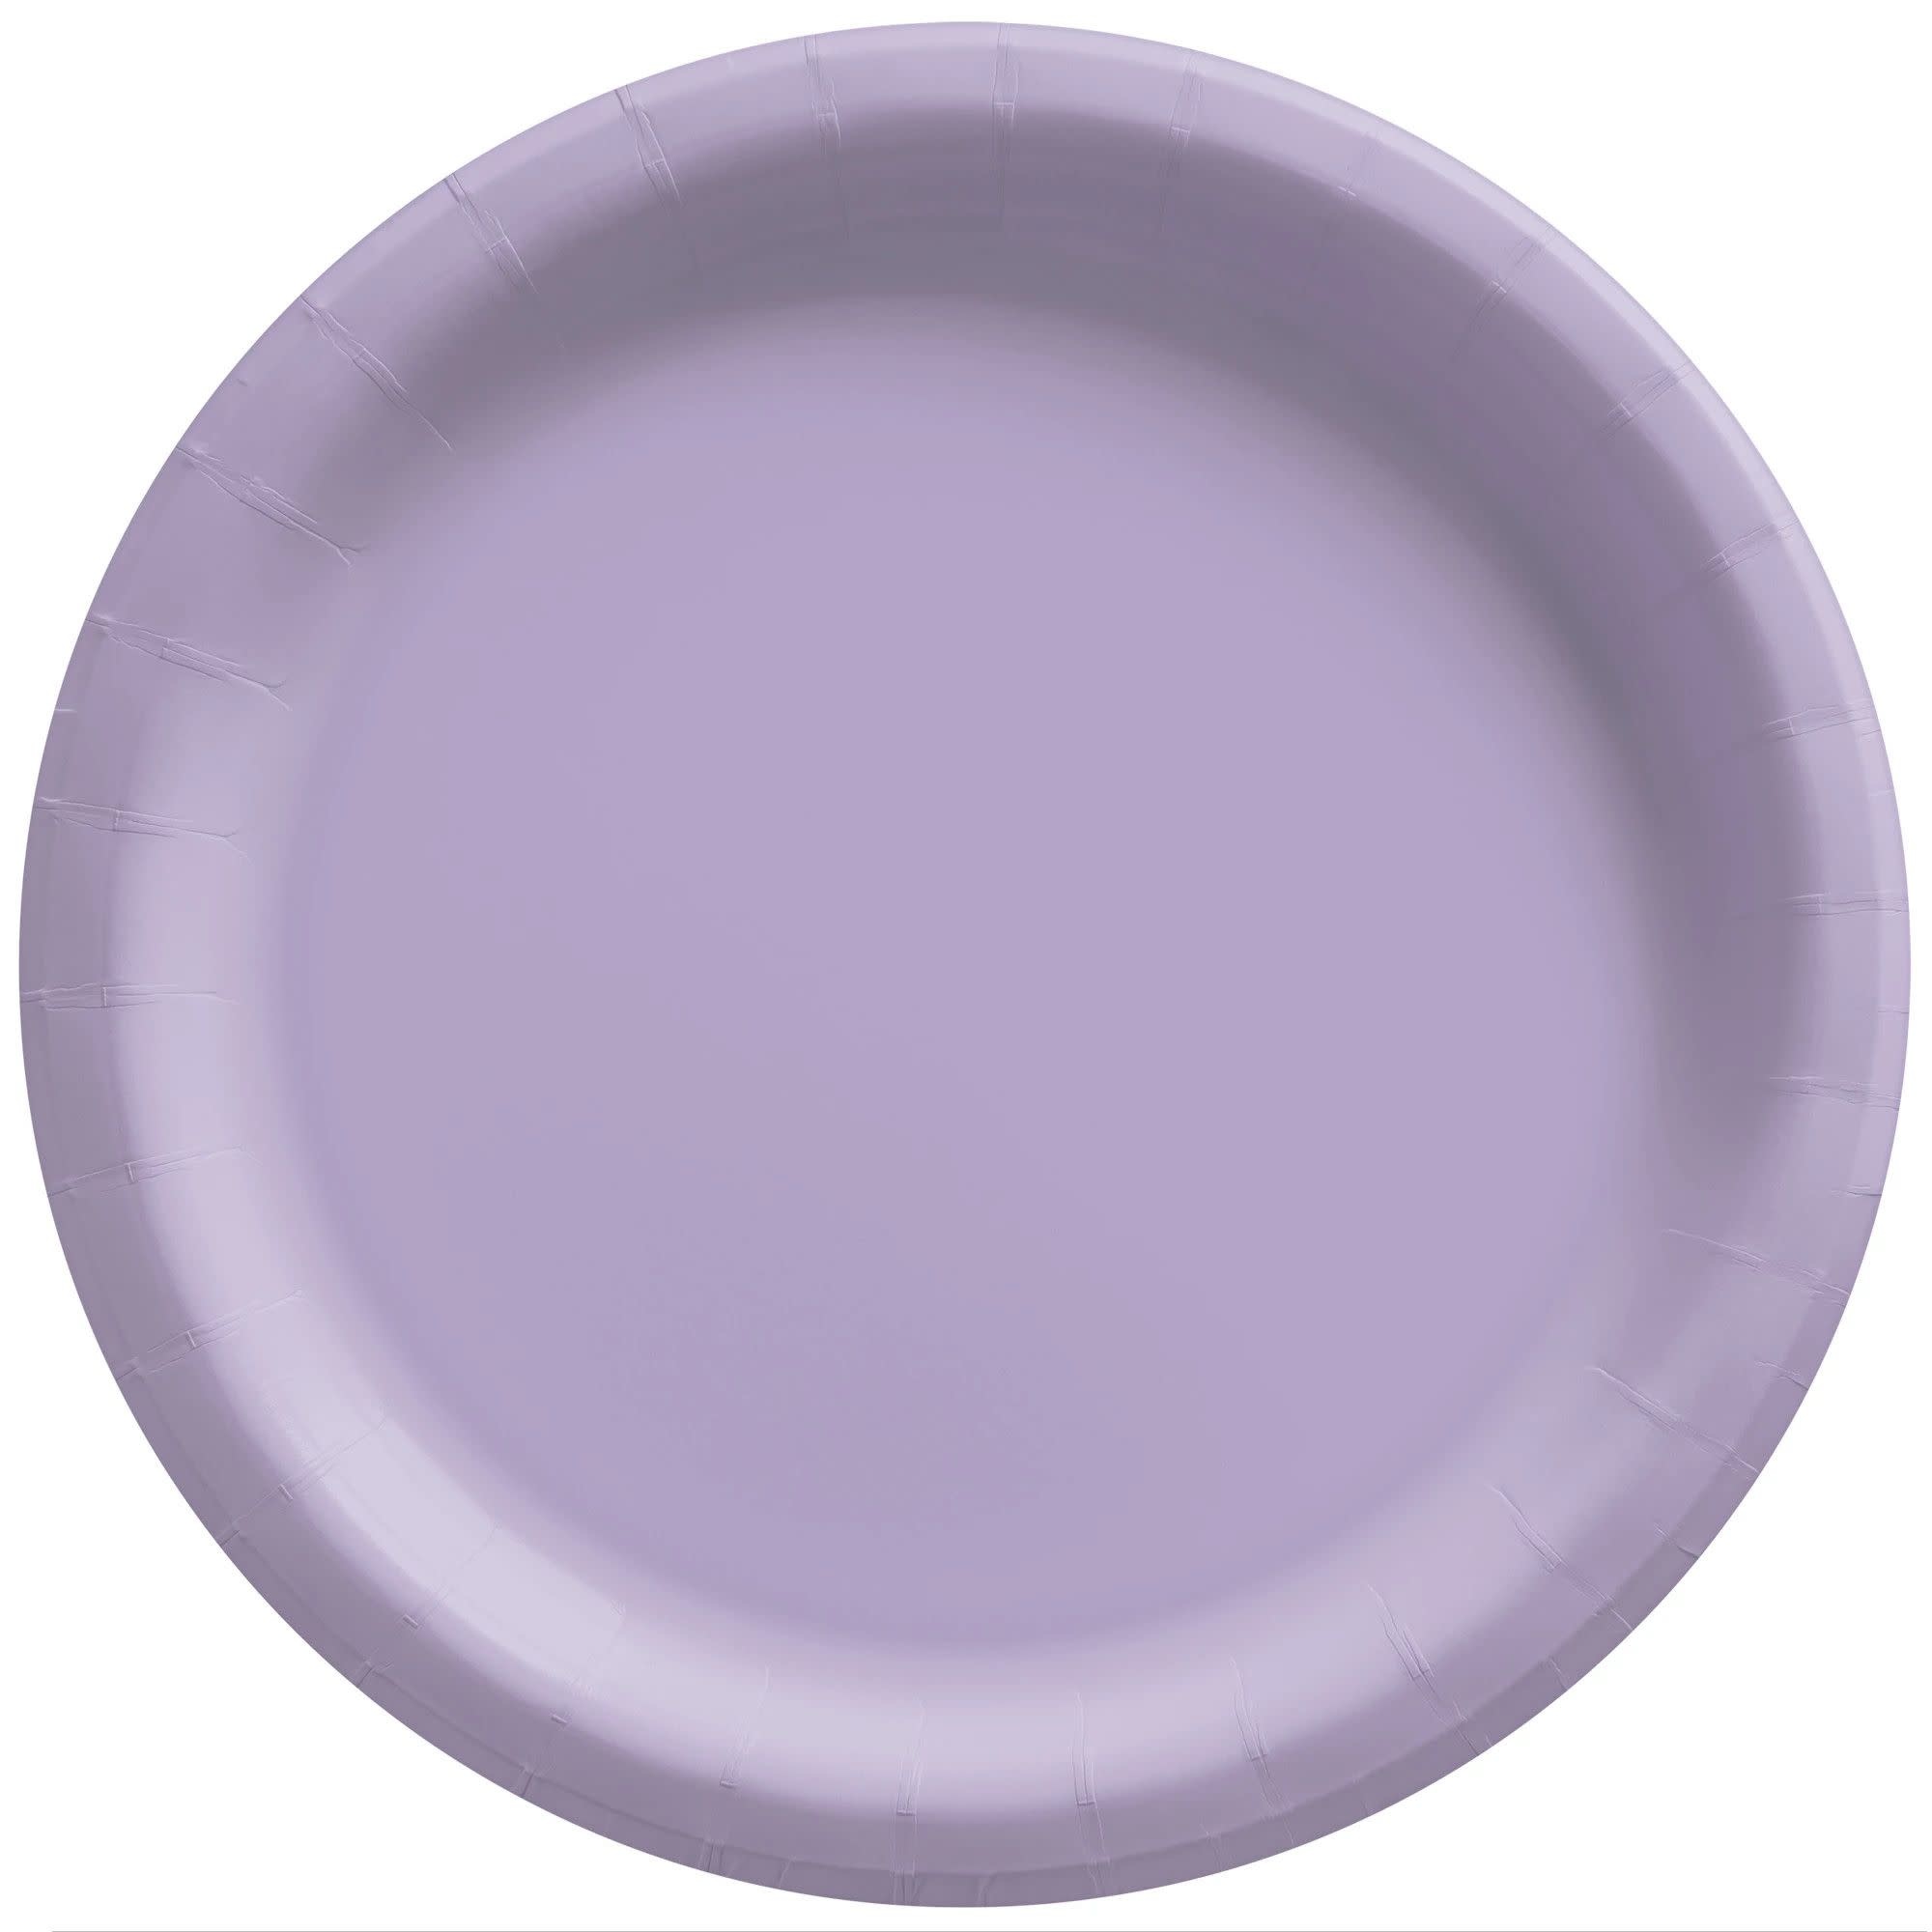 6 3/4" Round Paper Plates, Mid Ct. - Lavender